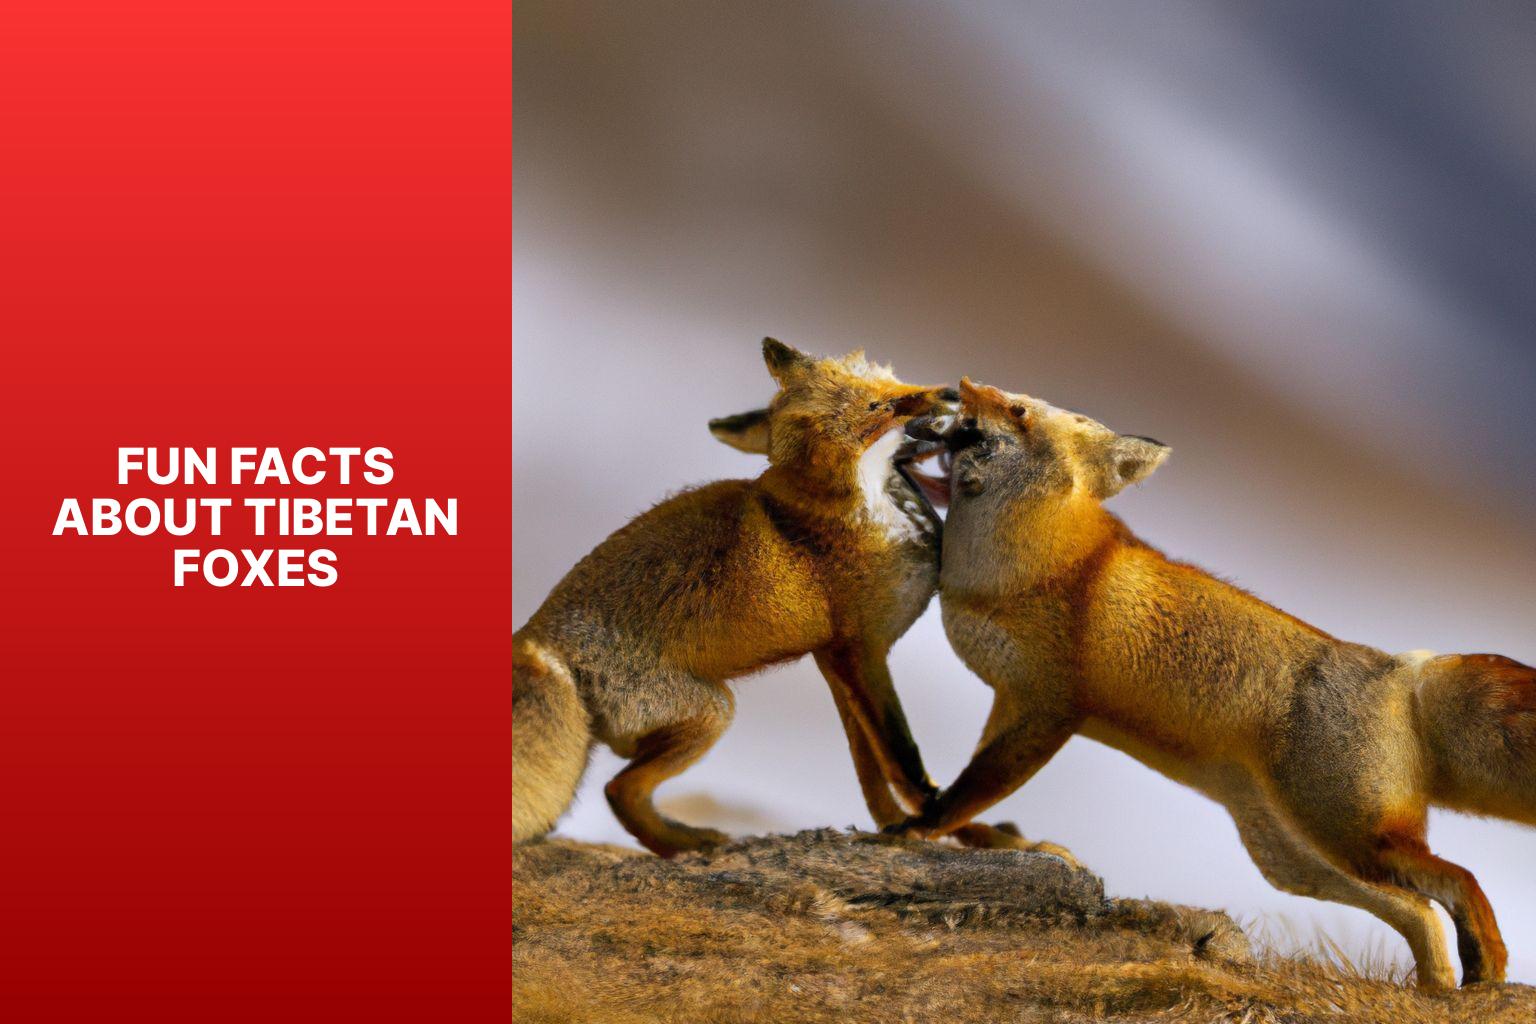 Fun Facts about Tibetan Foxes - Tibetan Fox reproduction 